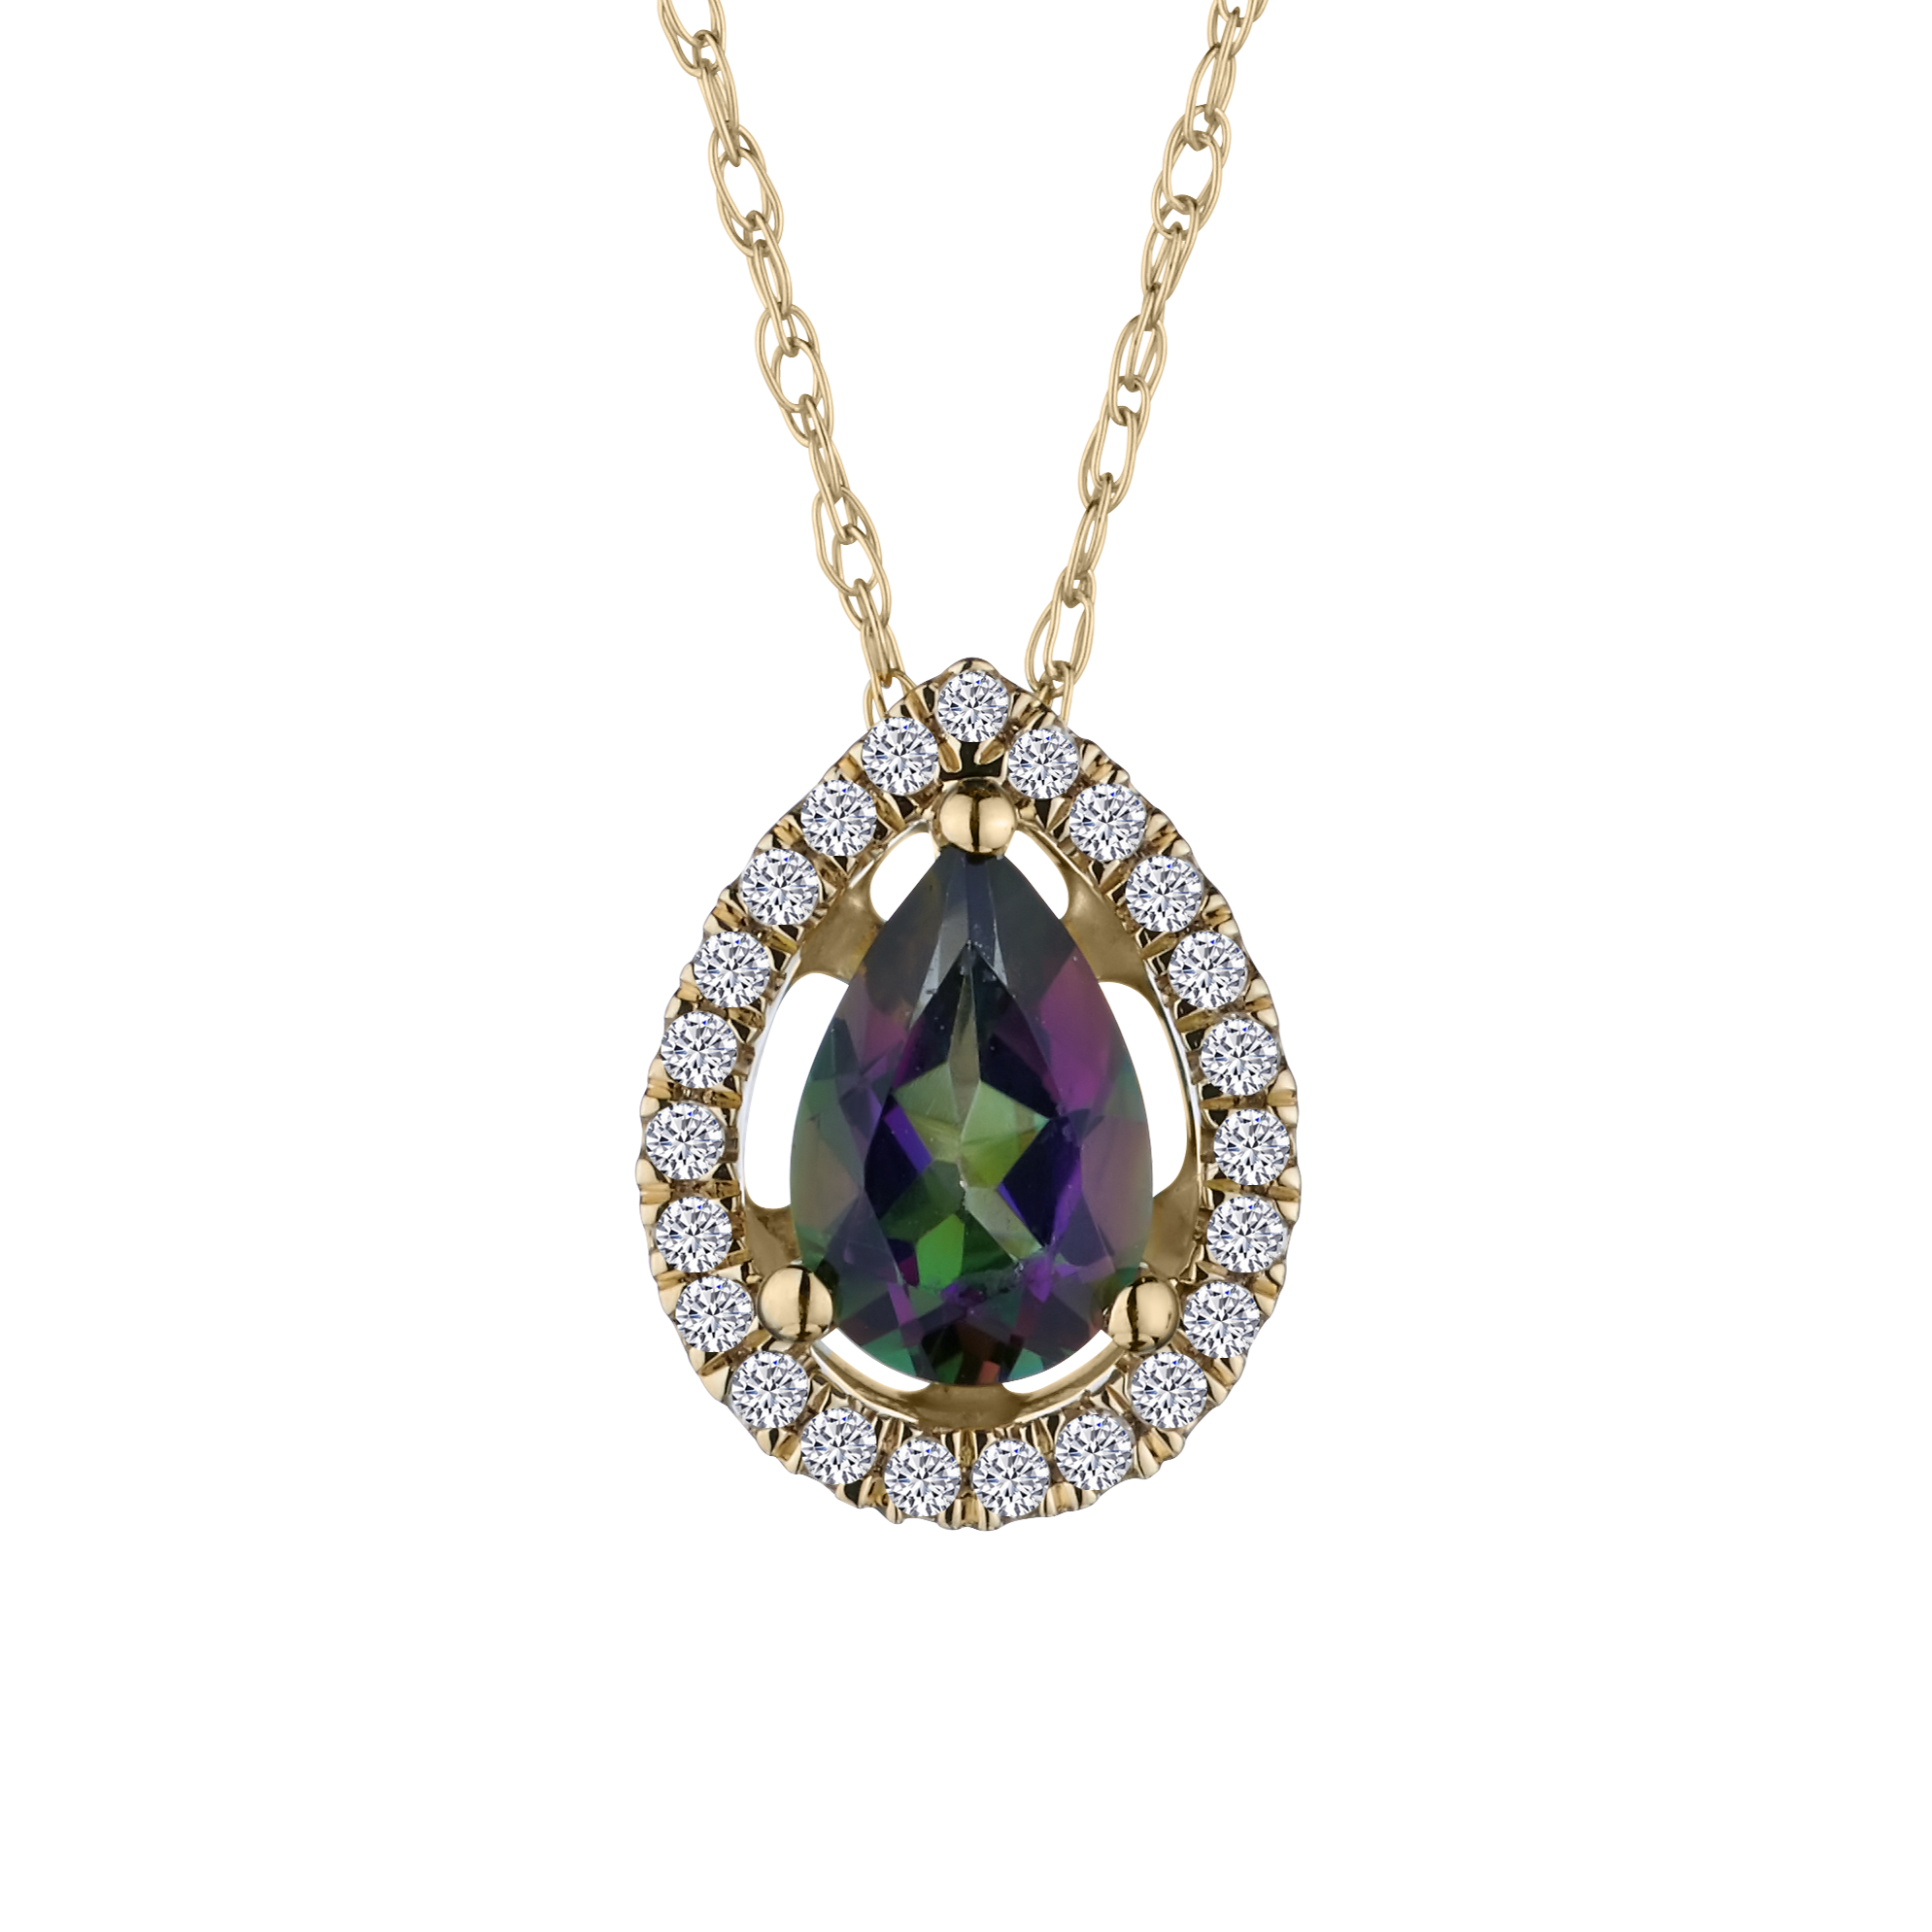 Genuine Mystic Topaz &.10 Carat Diamond Halo Pendant, 14kt Yellow Gold. Necklaces and Pendants. Griffin Jewellery Designs. 